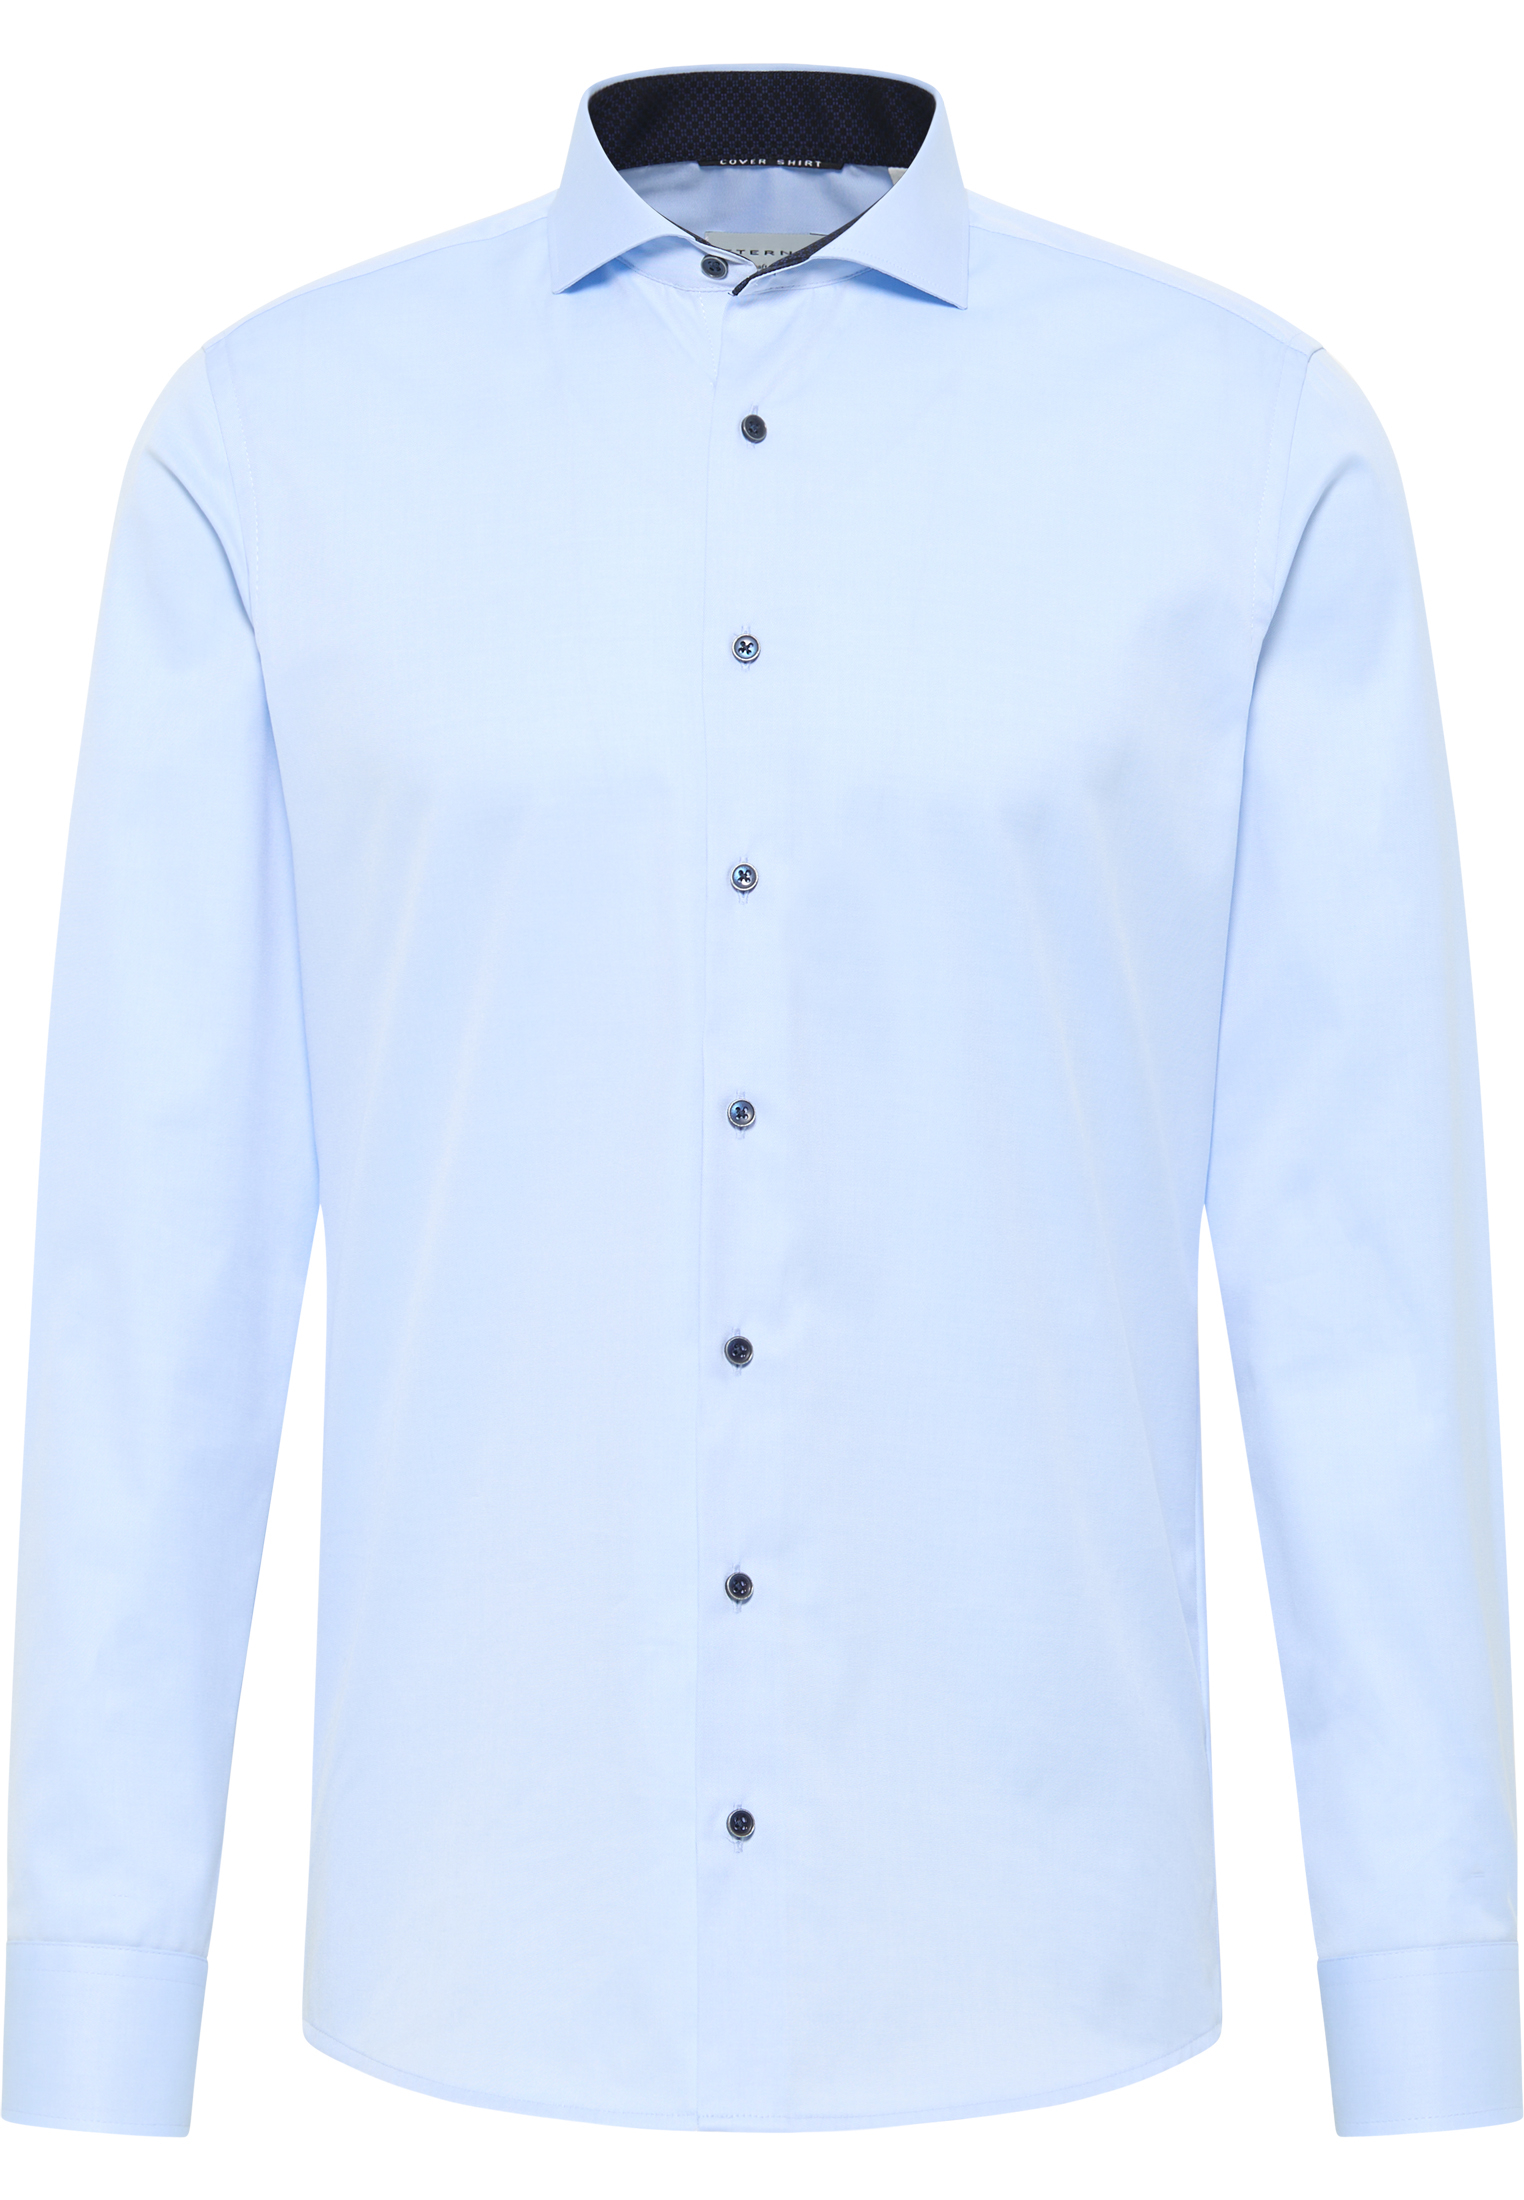 SLIM FIT Cover Shirt bleu clair uni